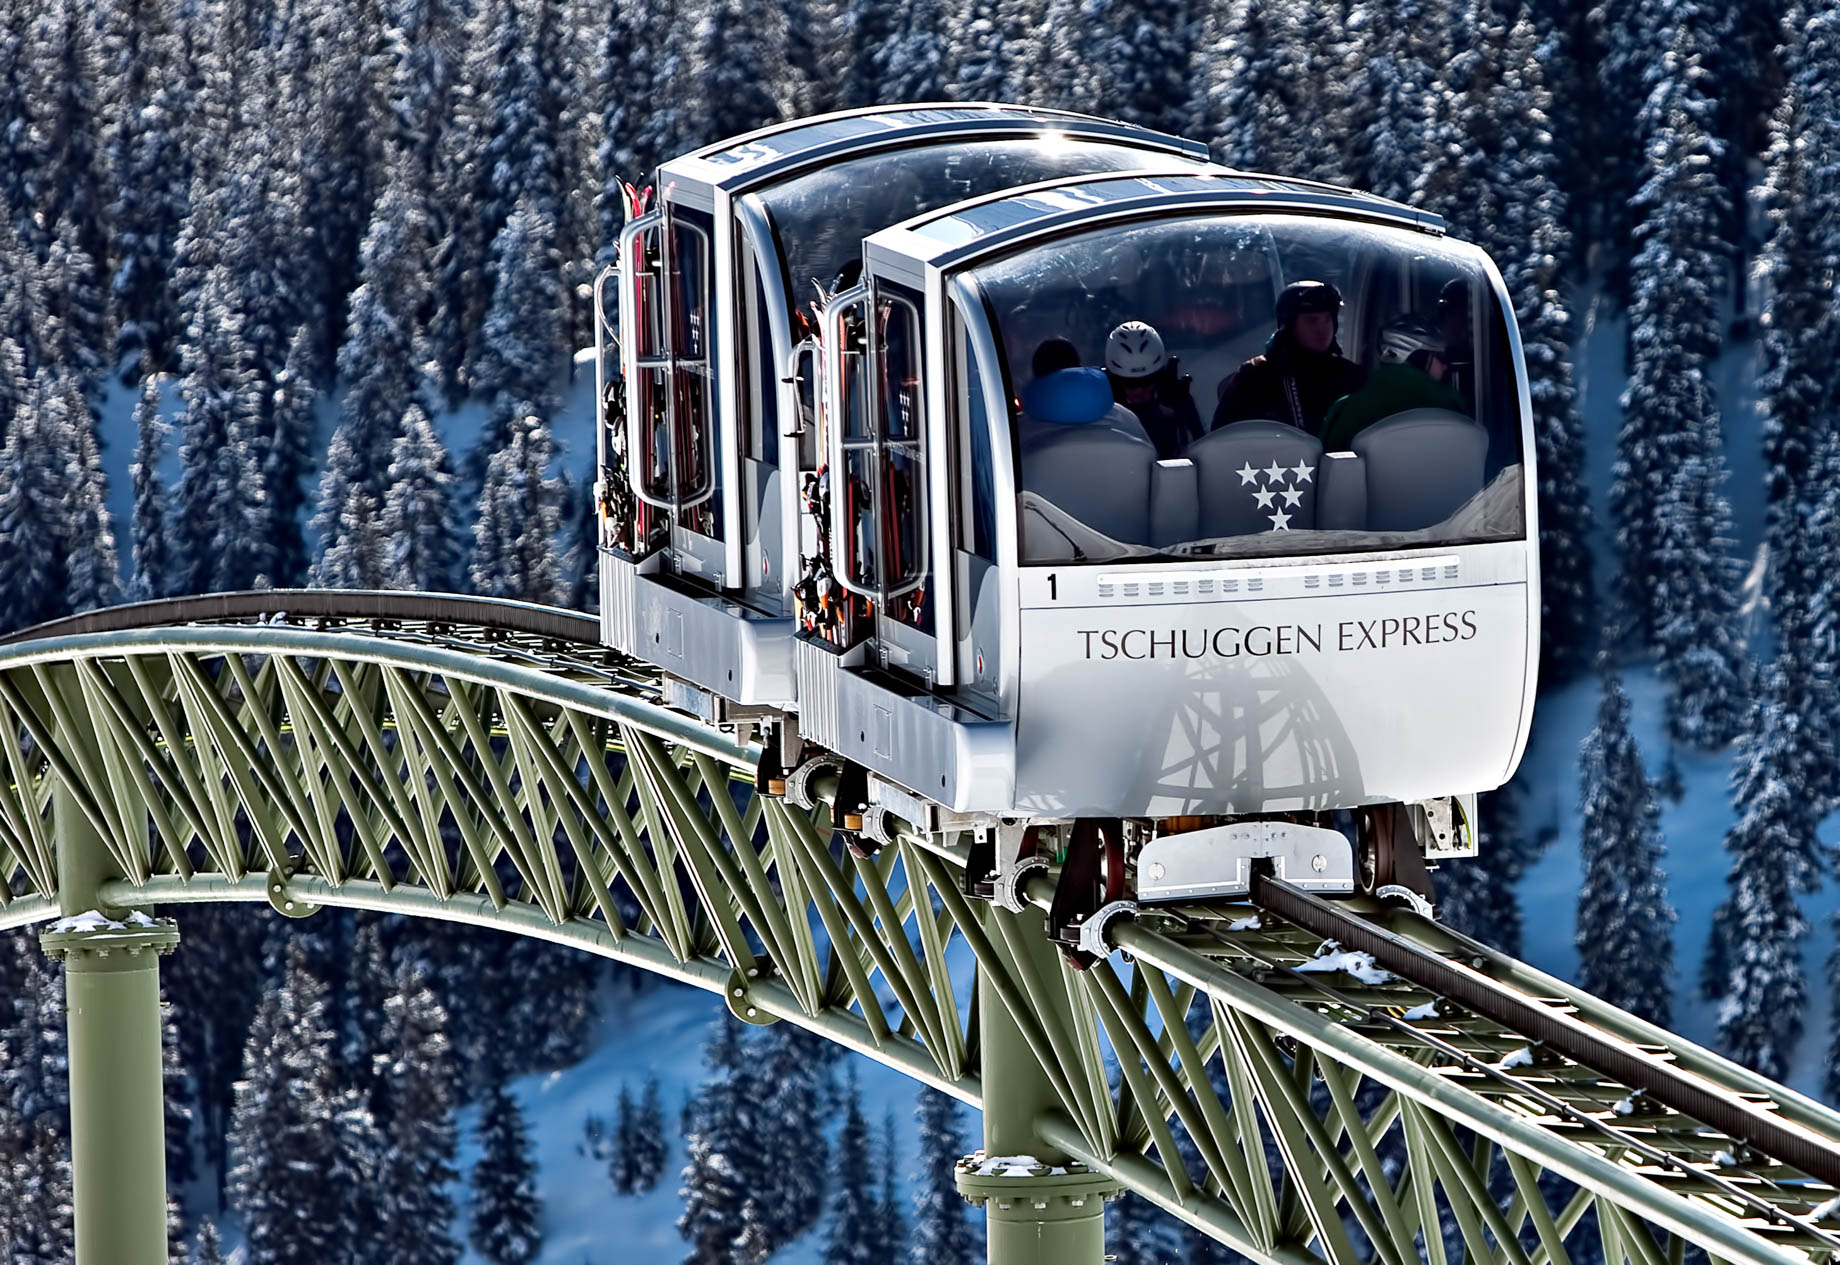 Tschuggen Grand Hotel – Arosa, Switzerland – Sky Tram Cars